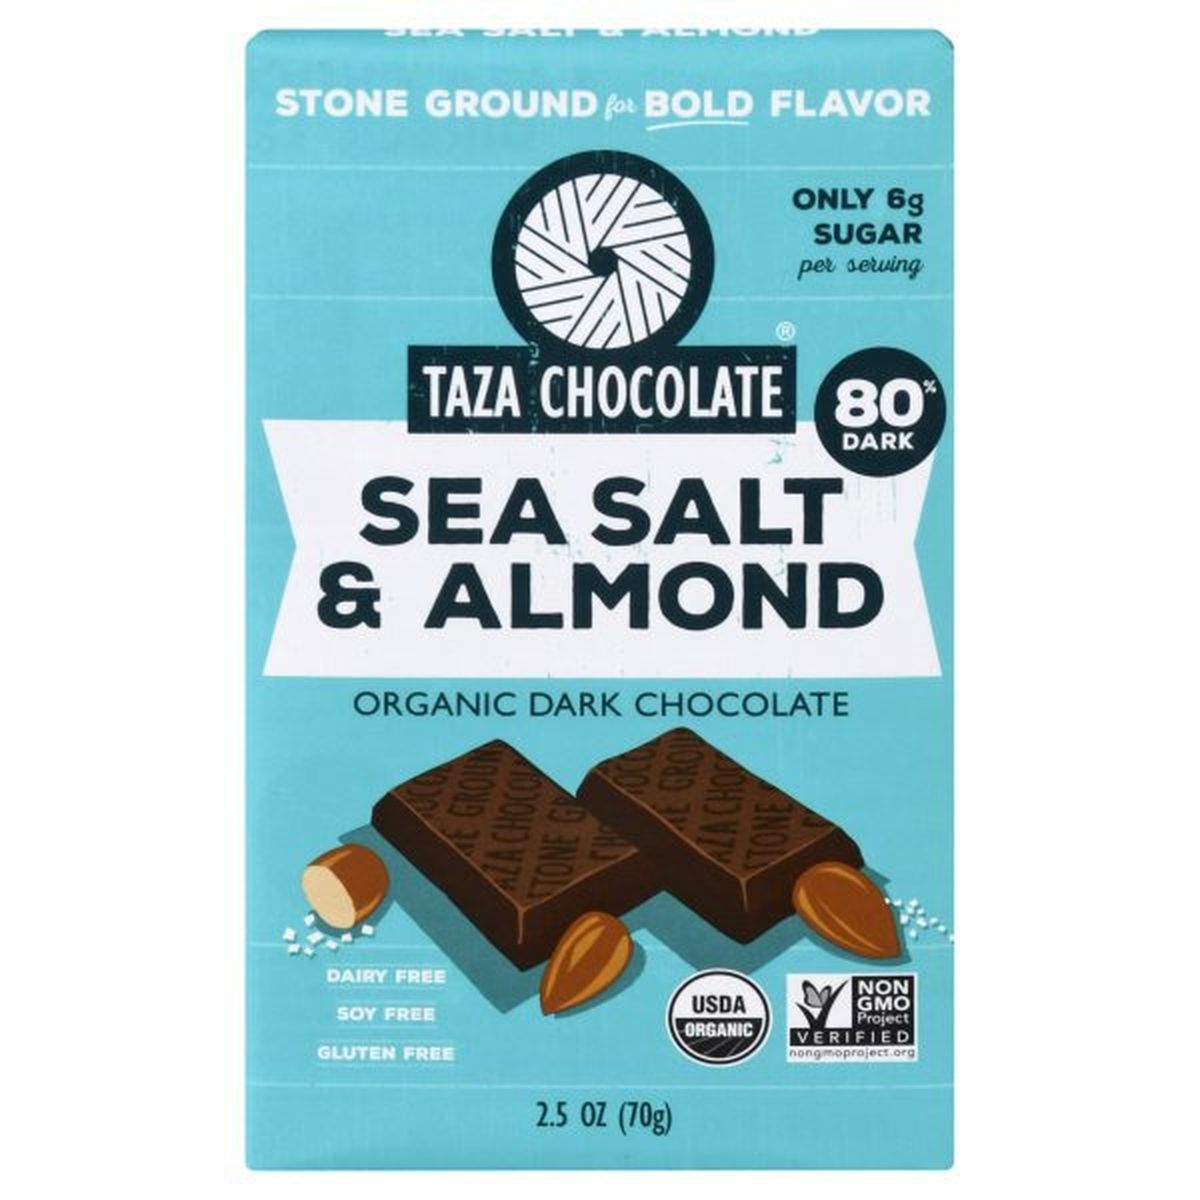 Calories in Taza Chocolate Dark Chocolate, Organic, Sea Salt & Almond, 80% Dark